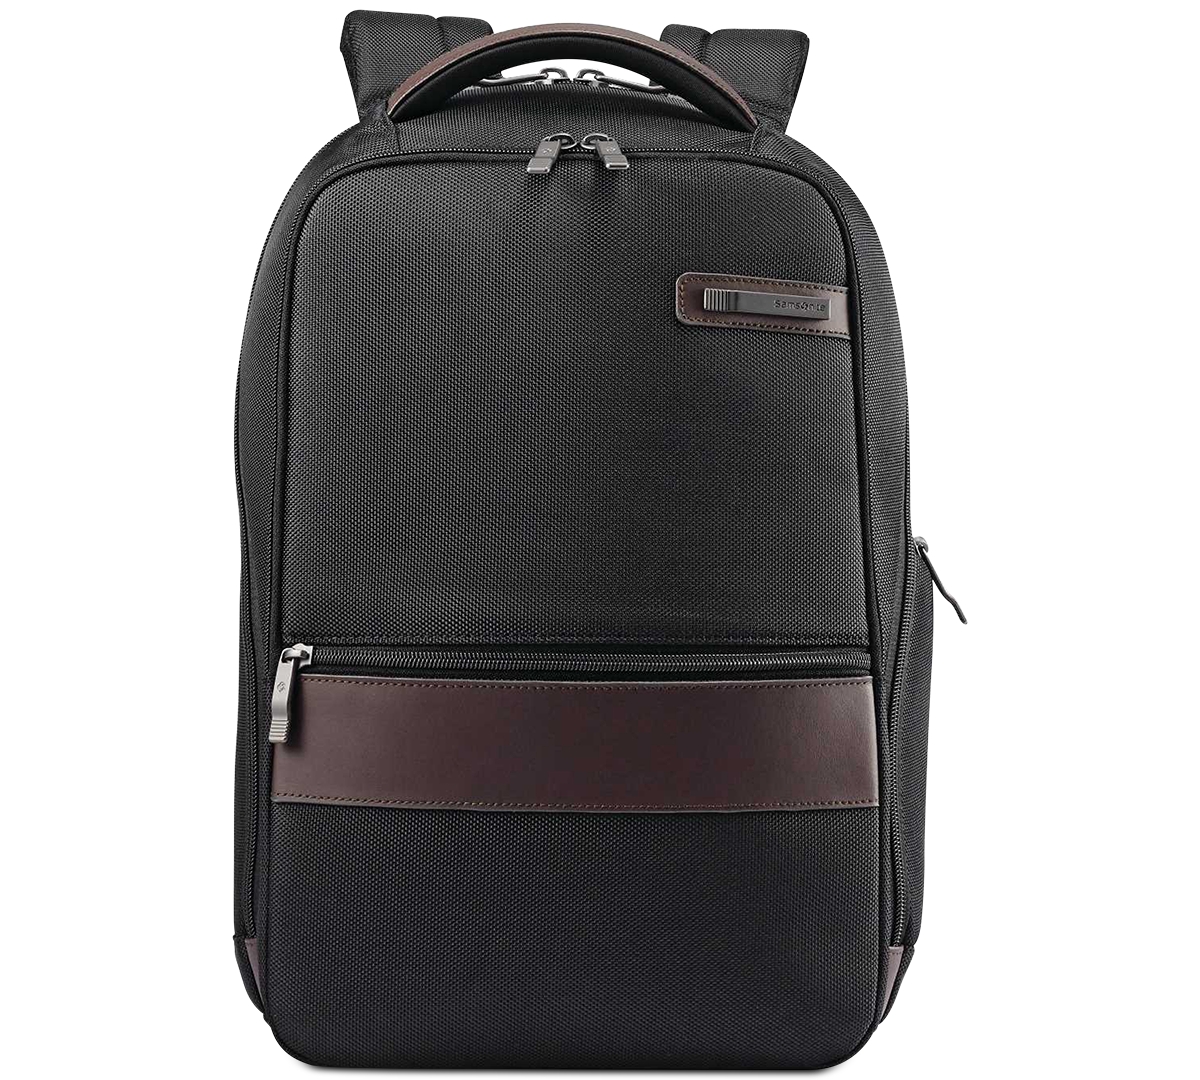 Men's Kombi 16" Small Backpack - Black/brown